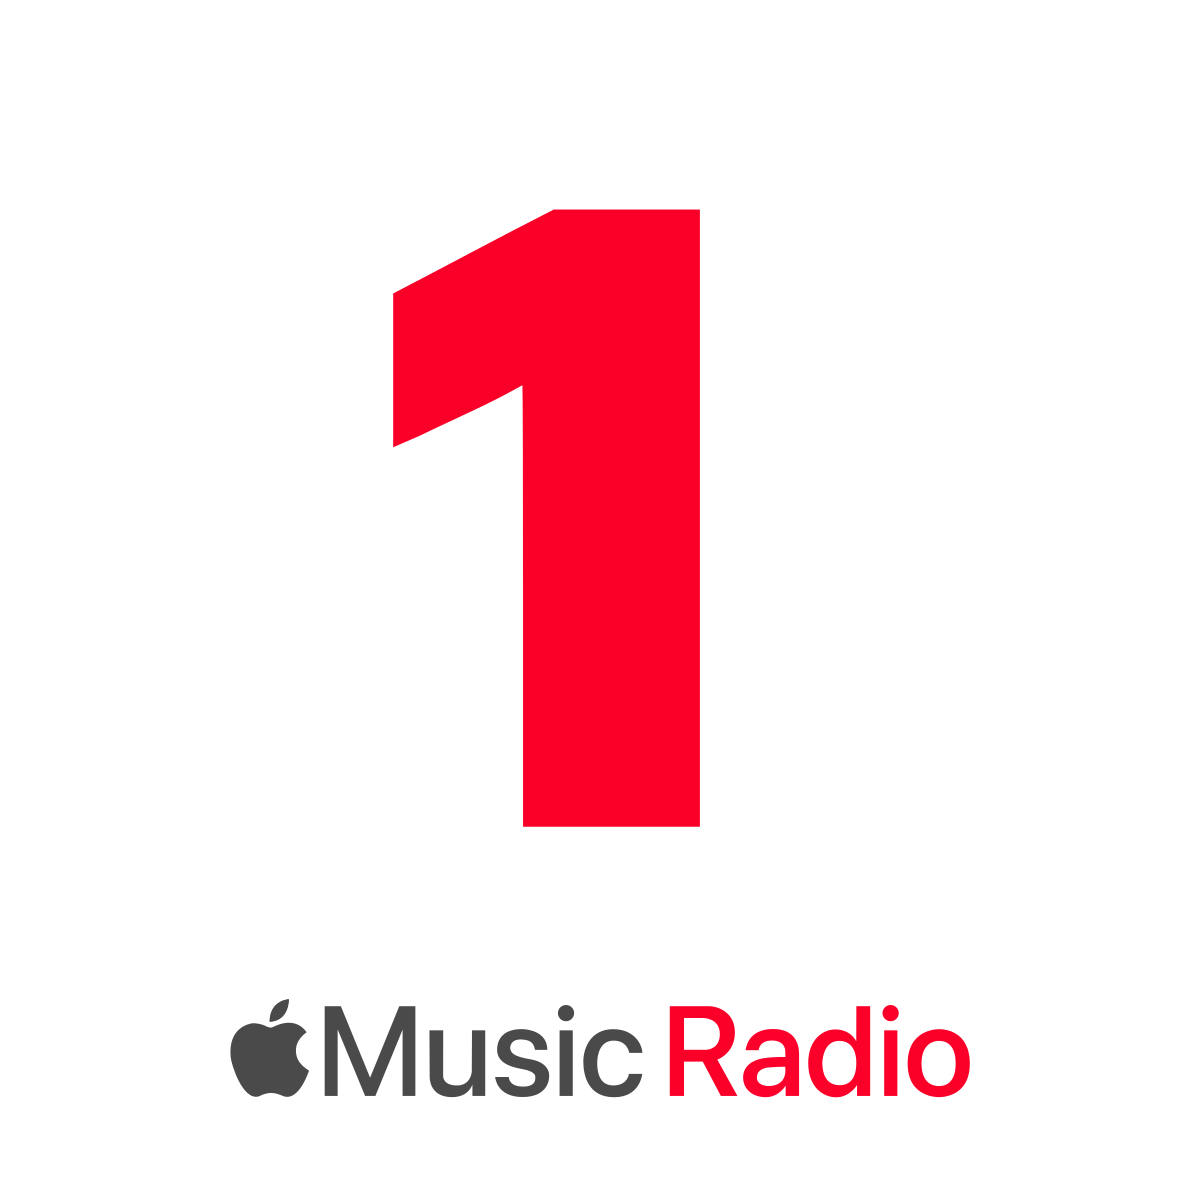 Apple Music Logo PNG Transparant Beeld